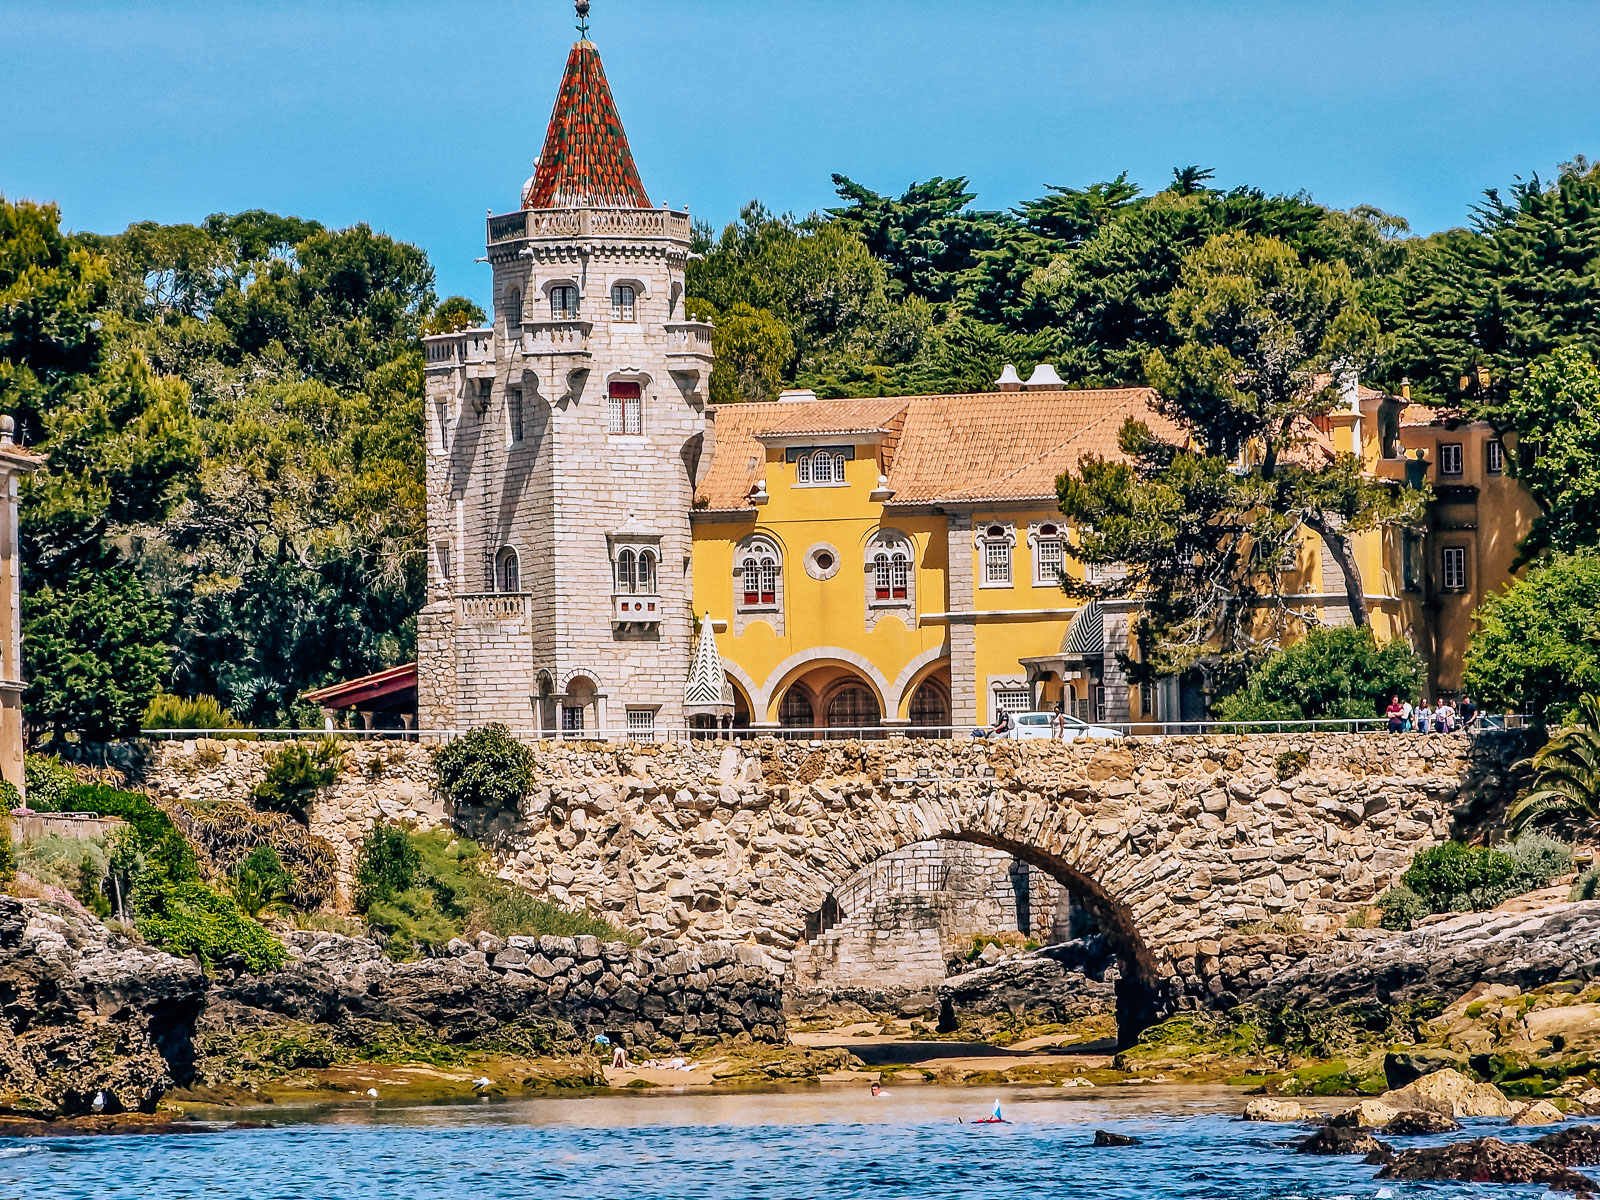 A yellow Portuguese style villa with a turret